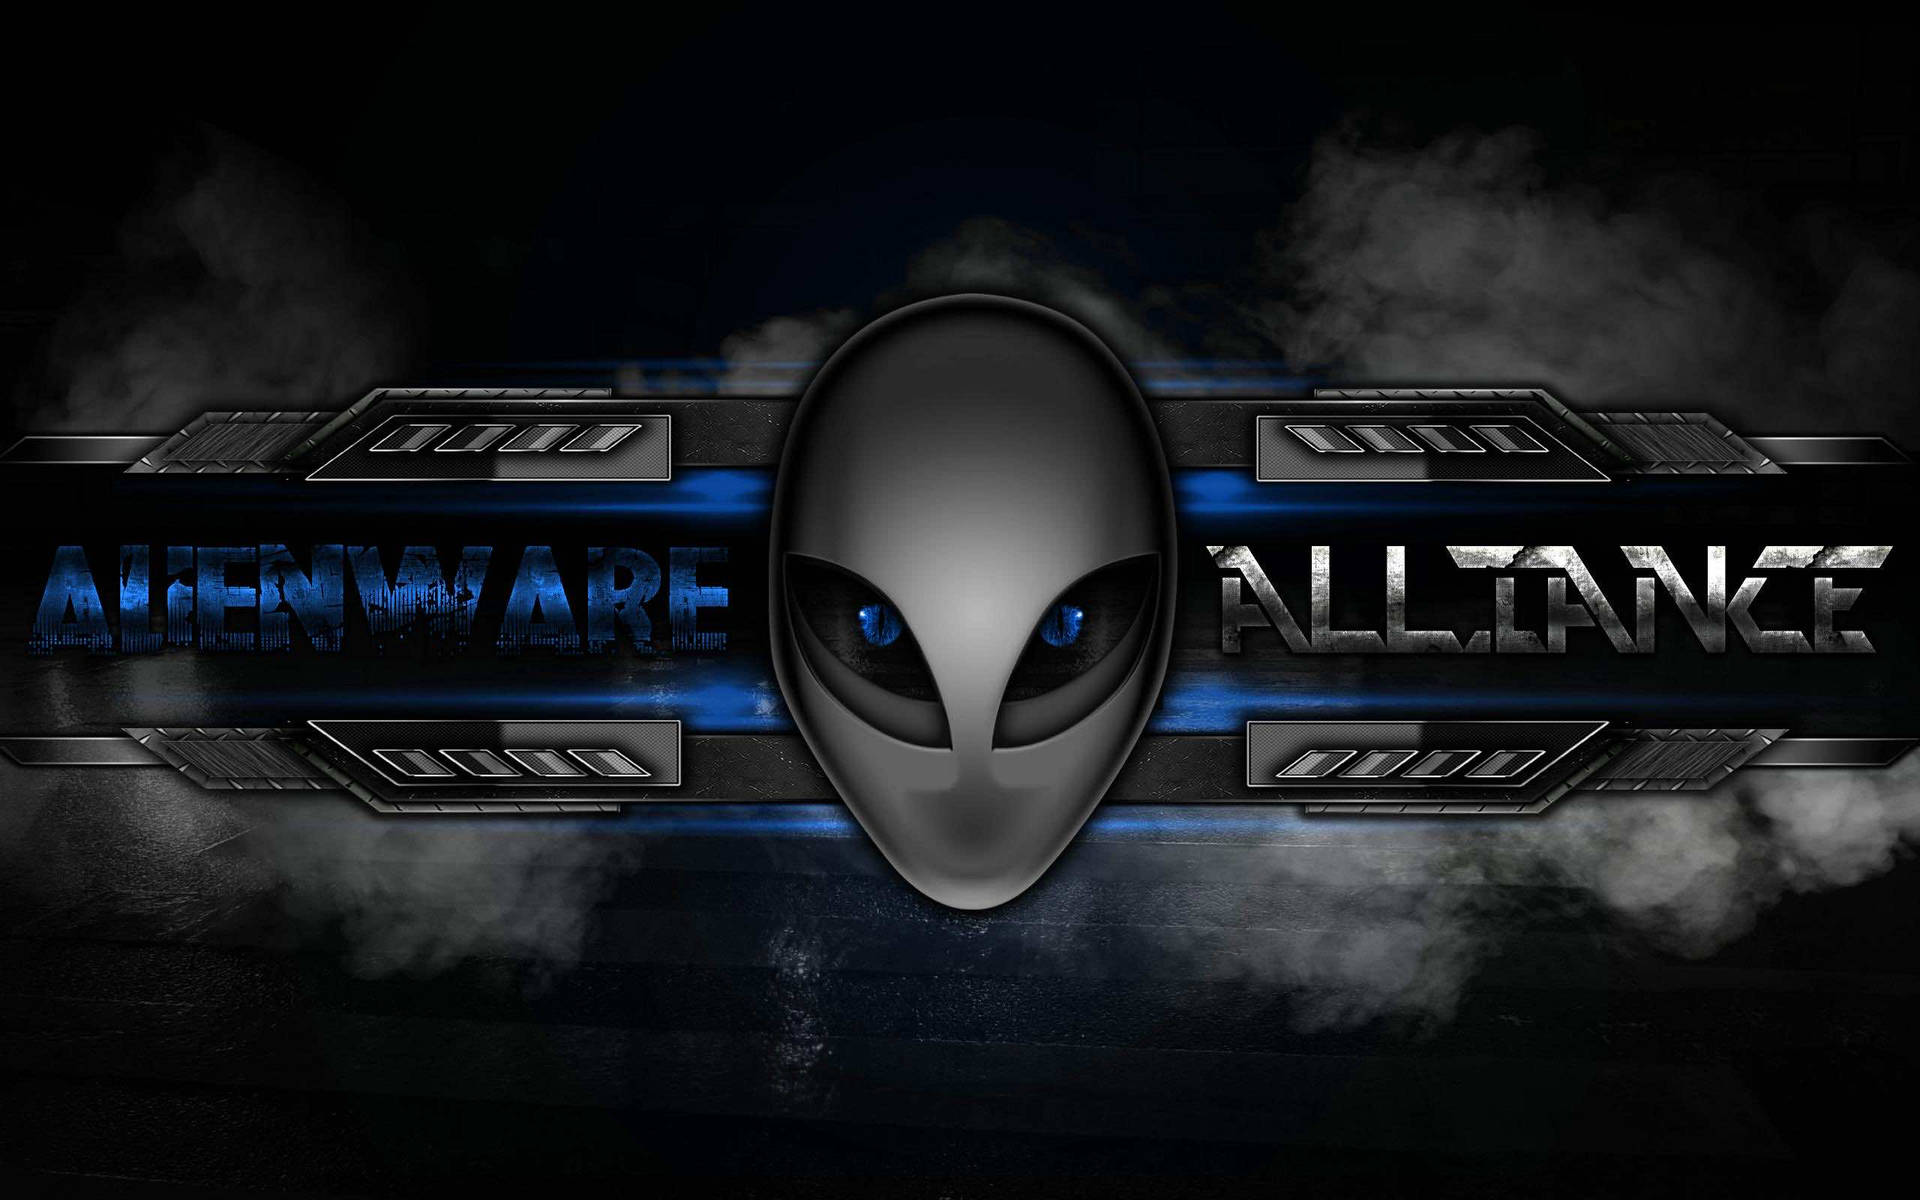 46+] Alienware Live Wallpapers - WallpaperSafari